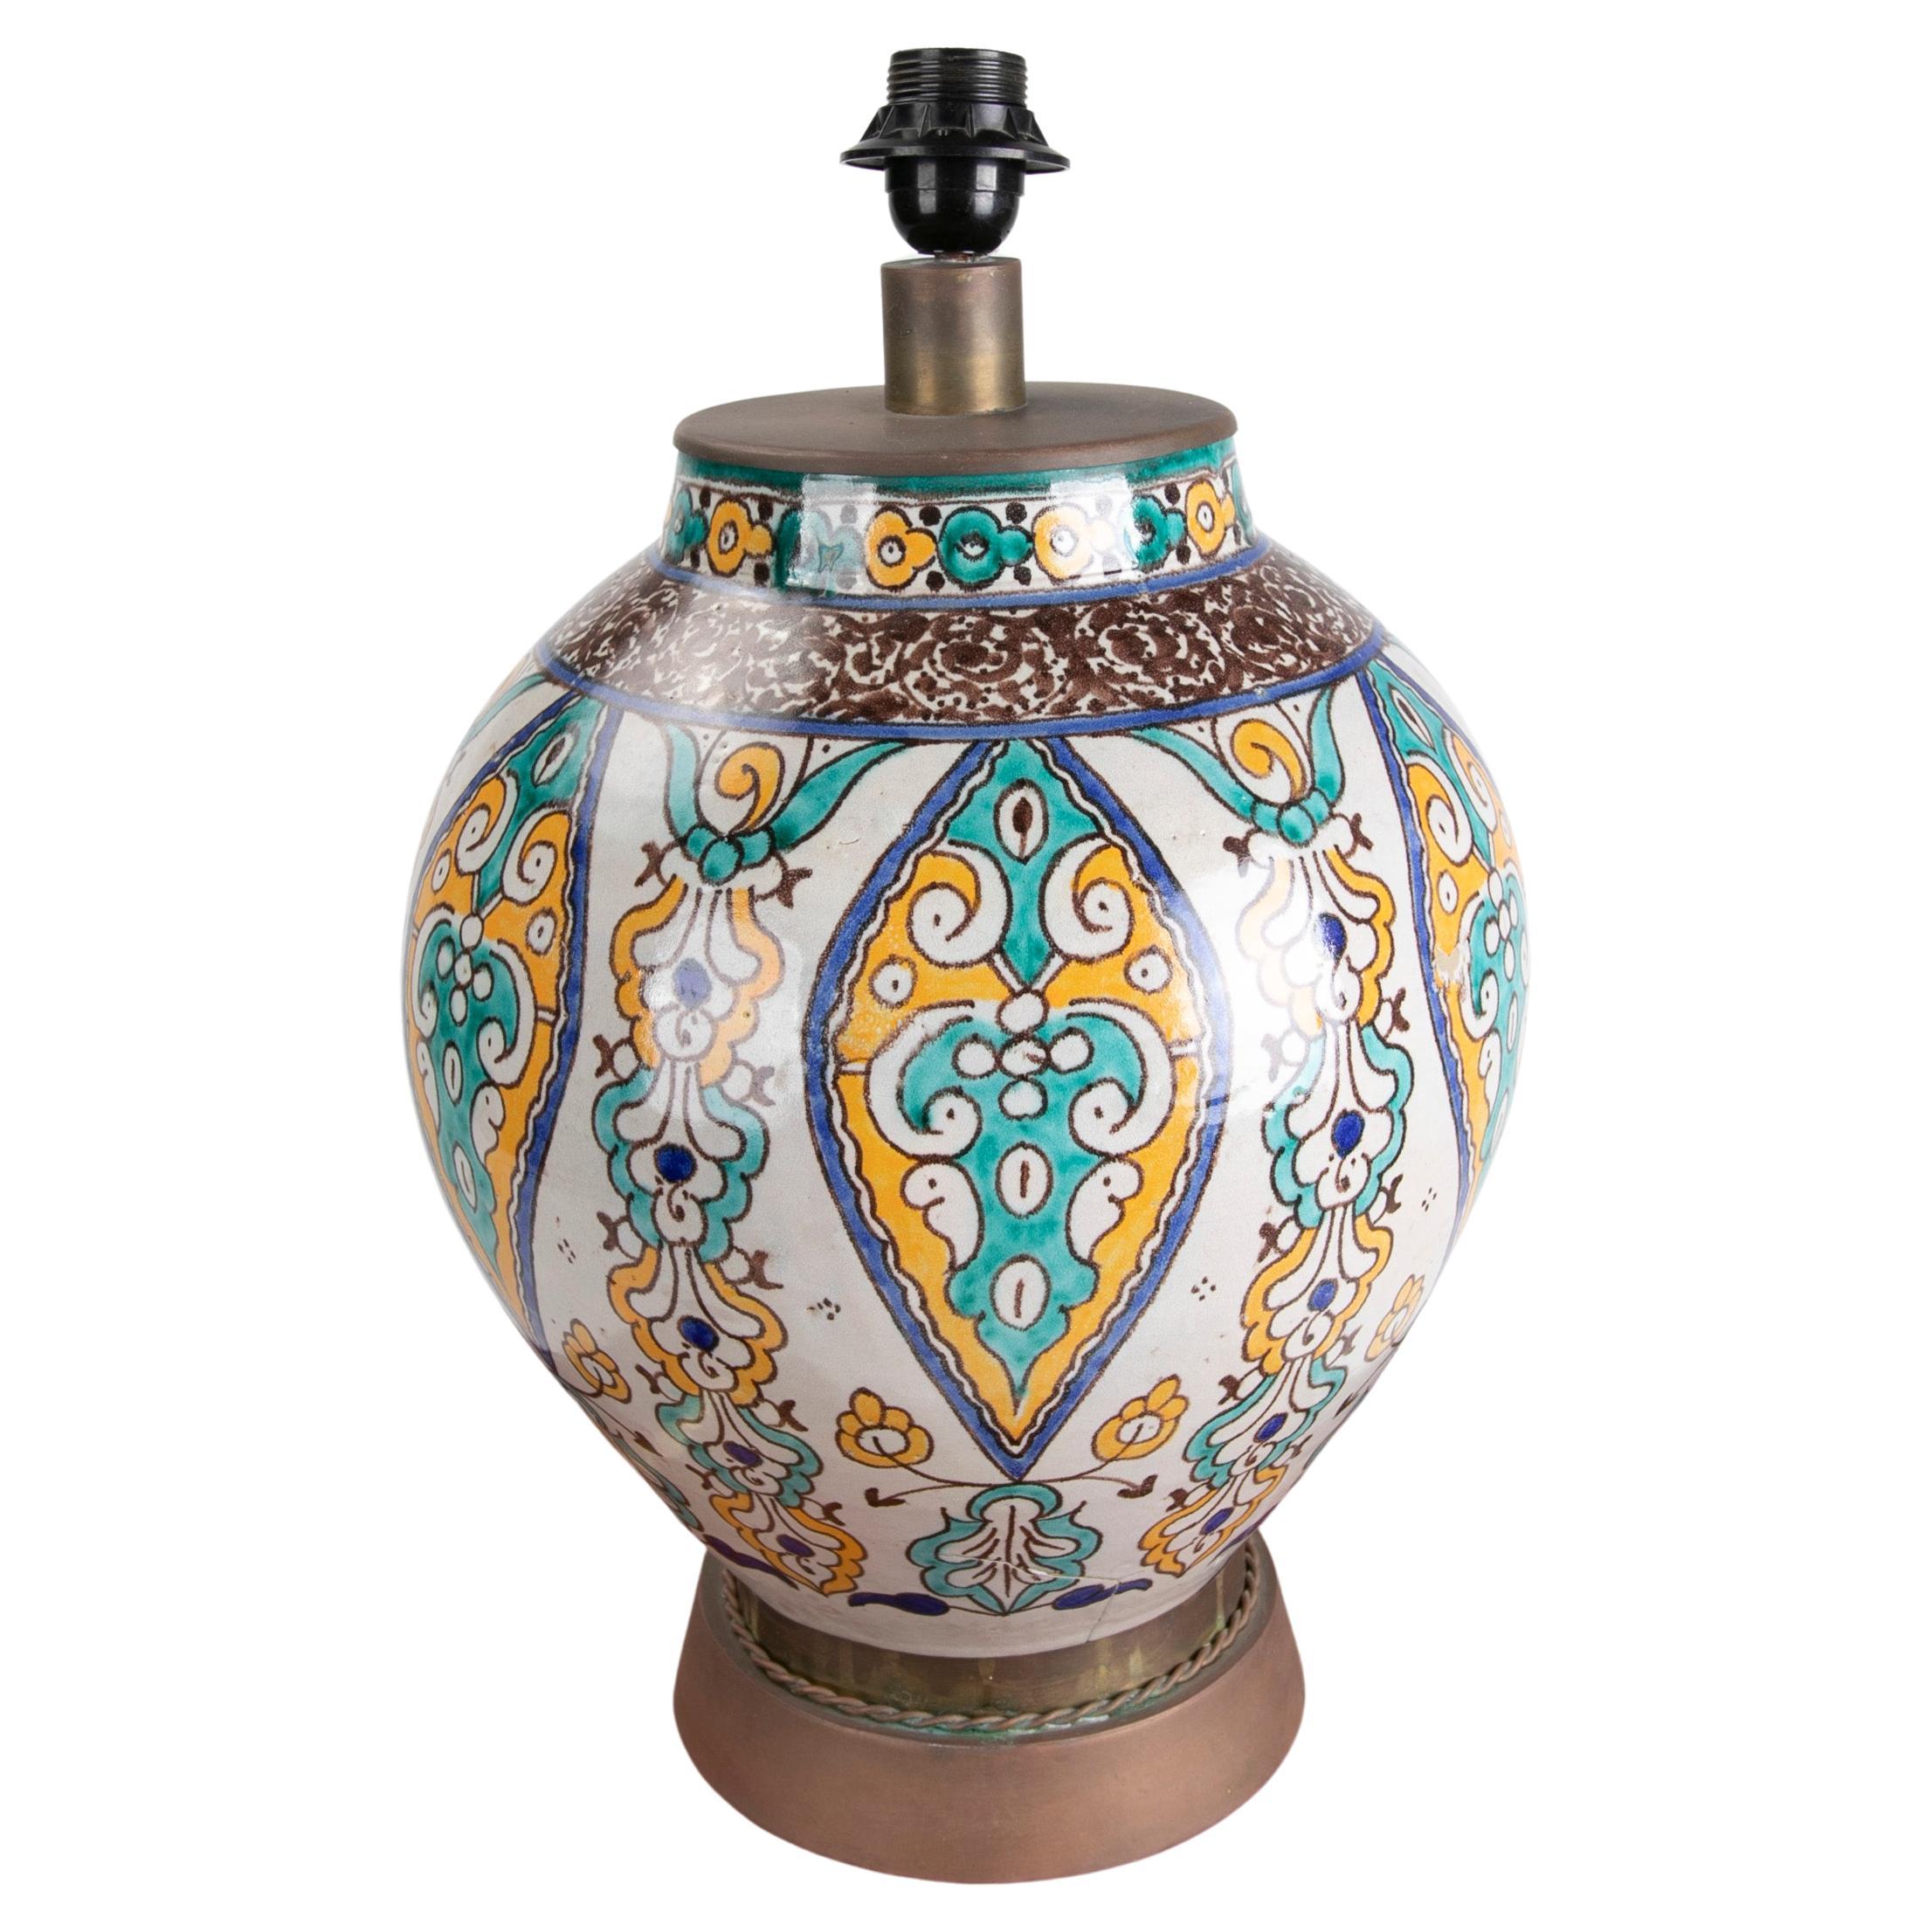 Handbemalte Keramik-Tischlampe mit Metalldekorationen 